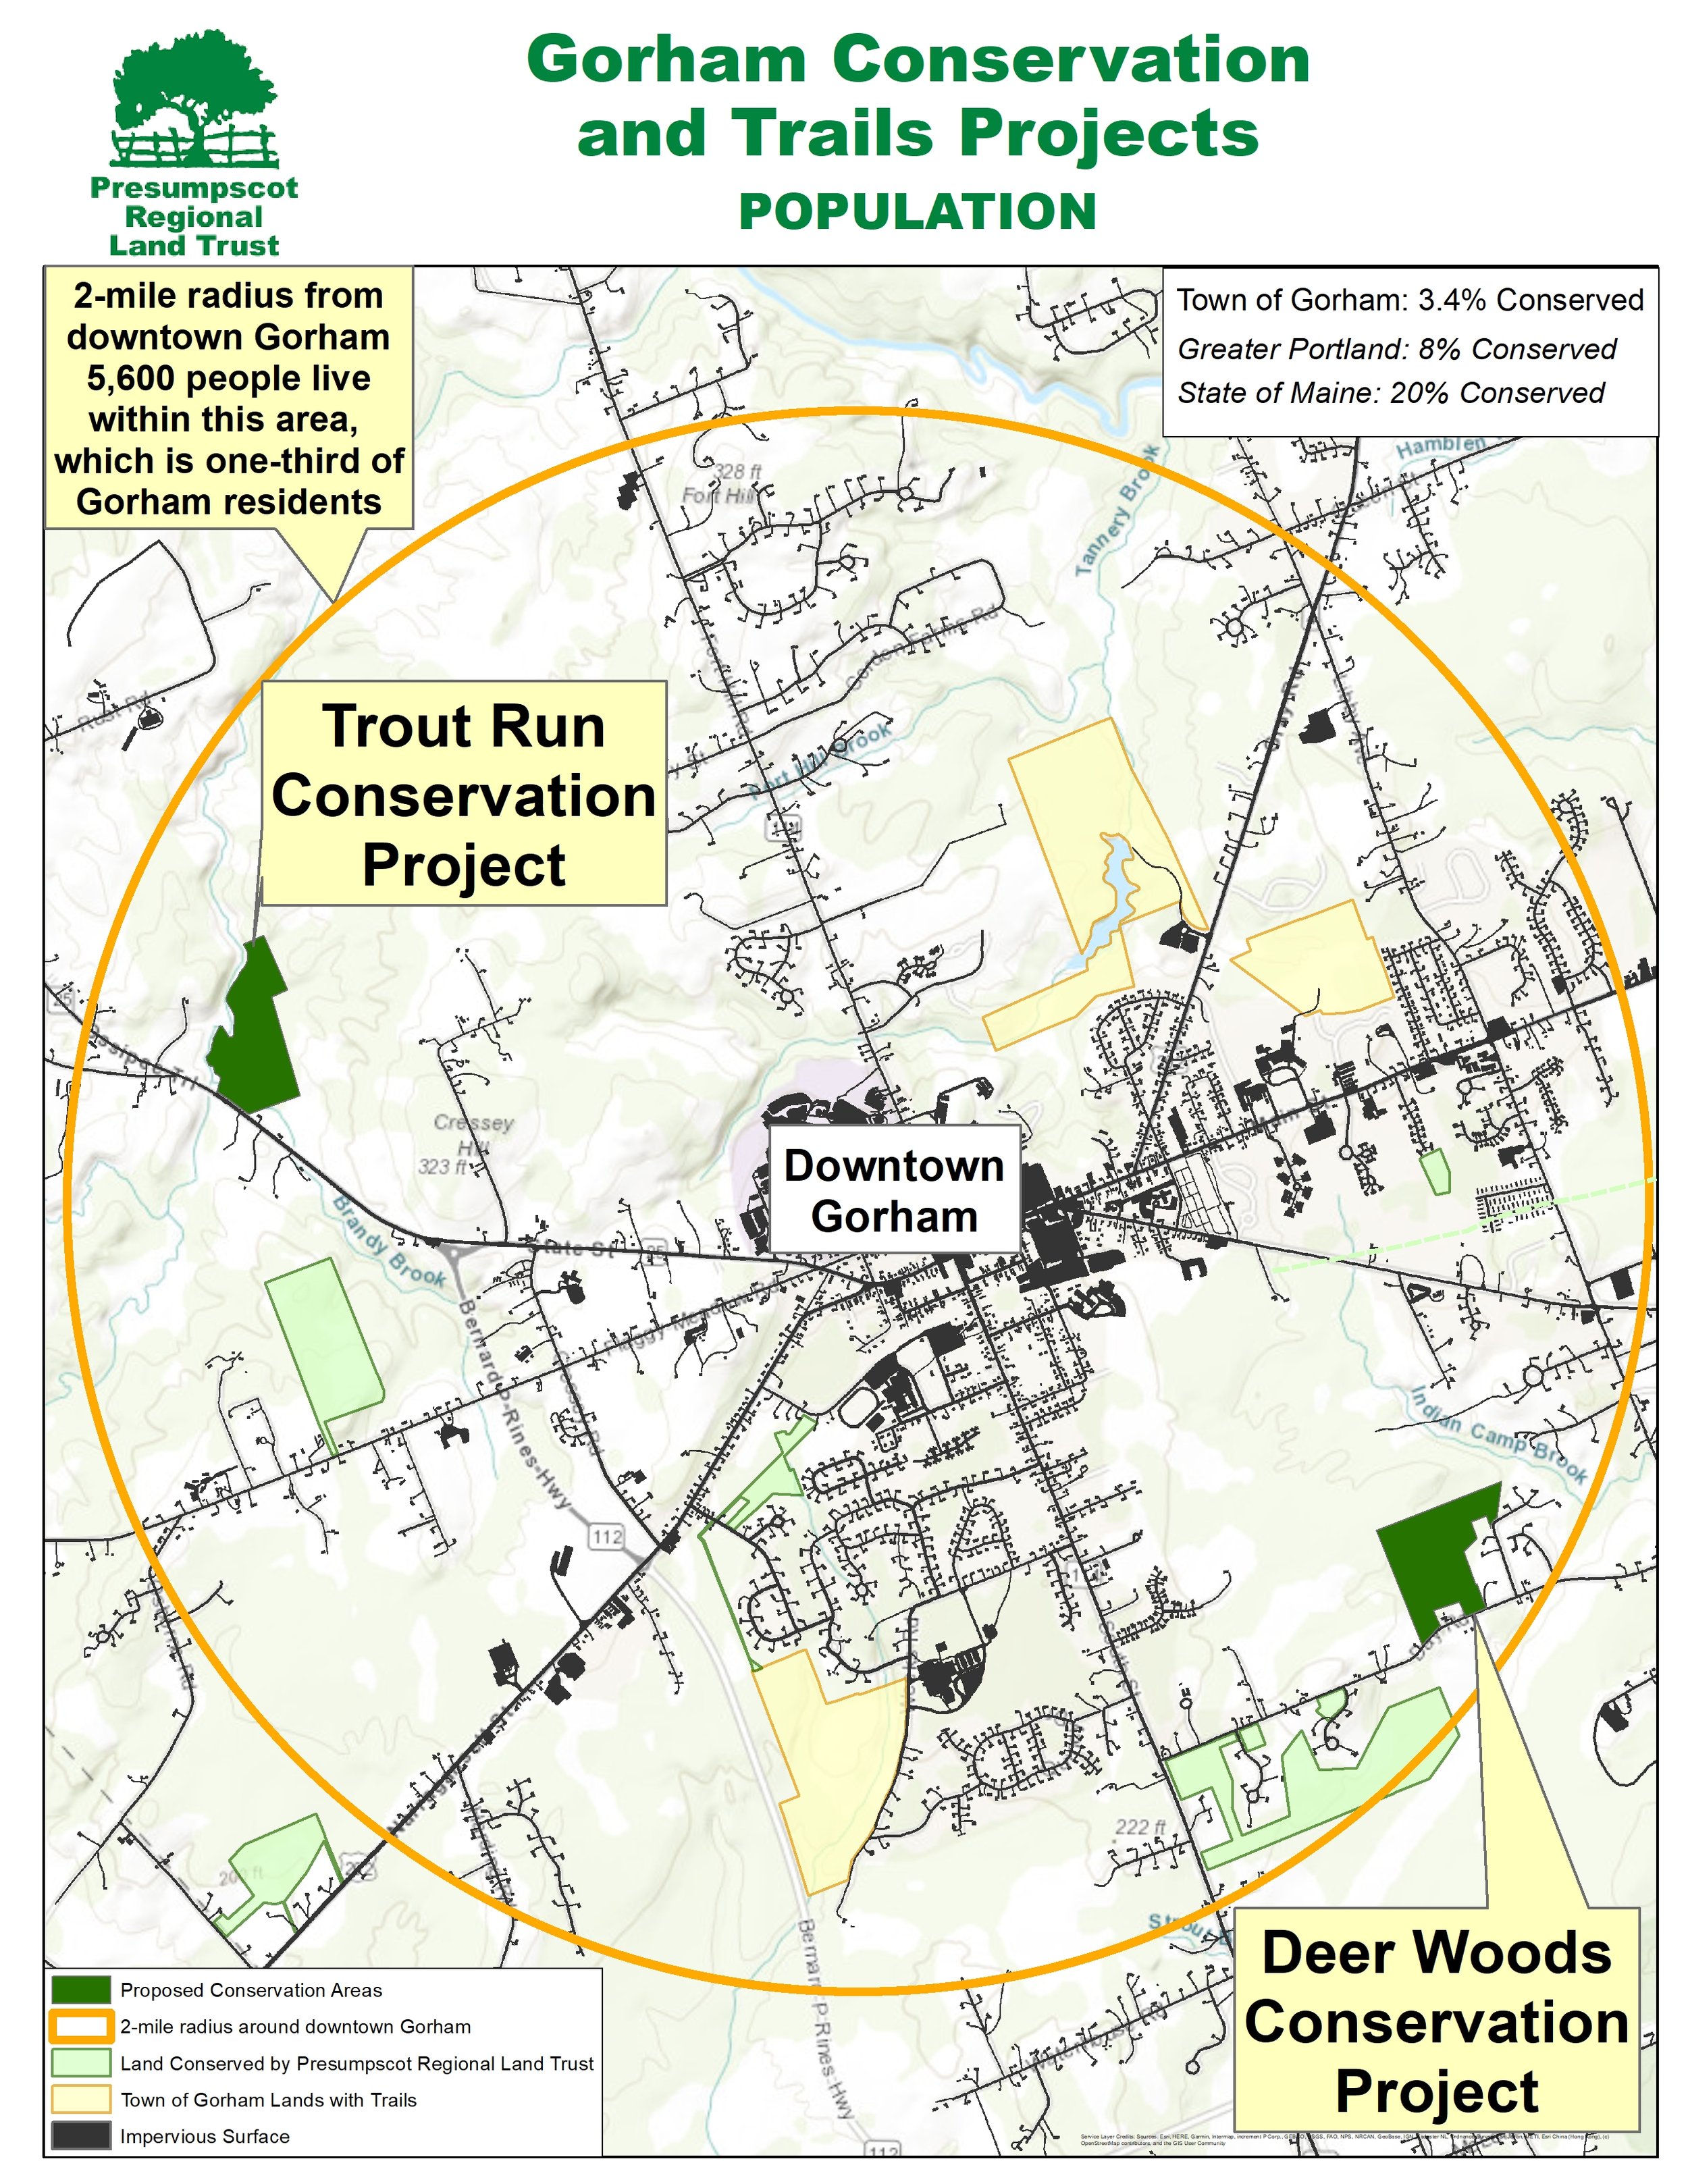 Gorham Conservation Projects - Population (4).jpg